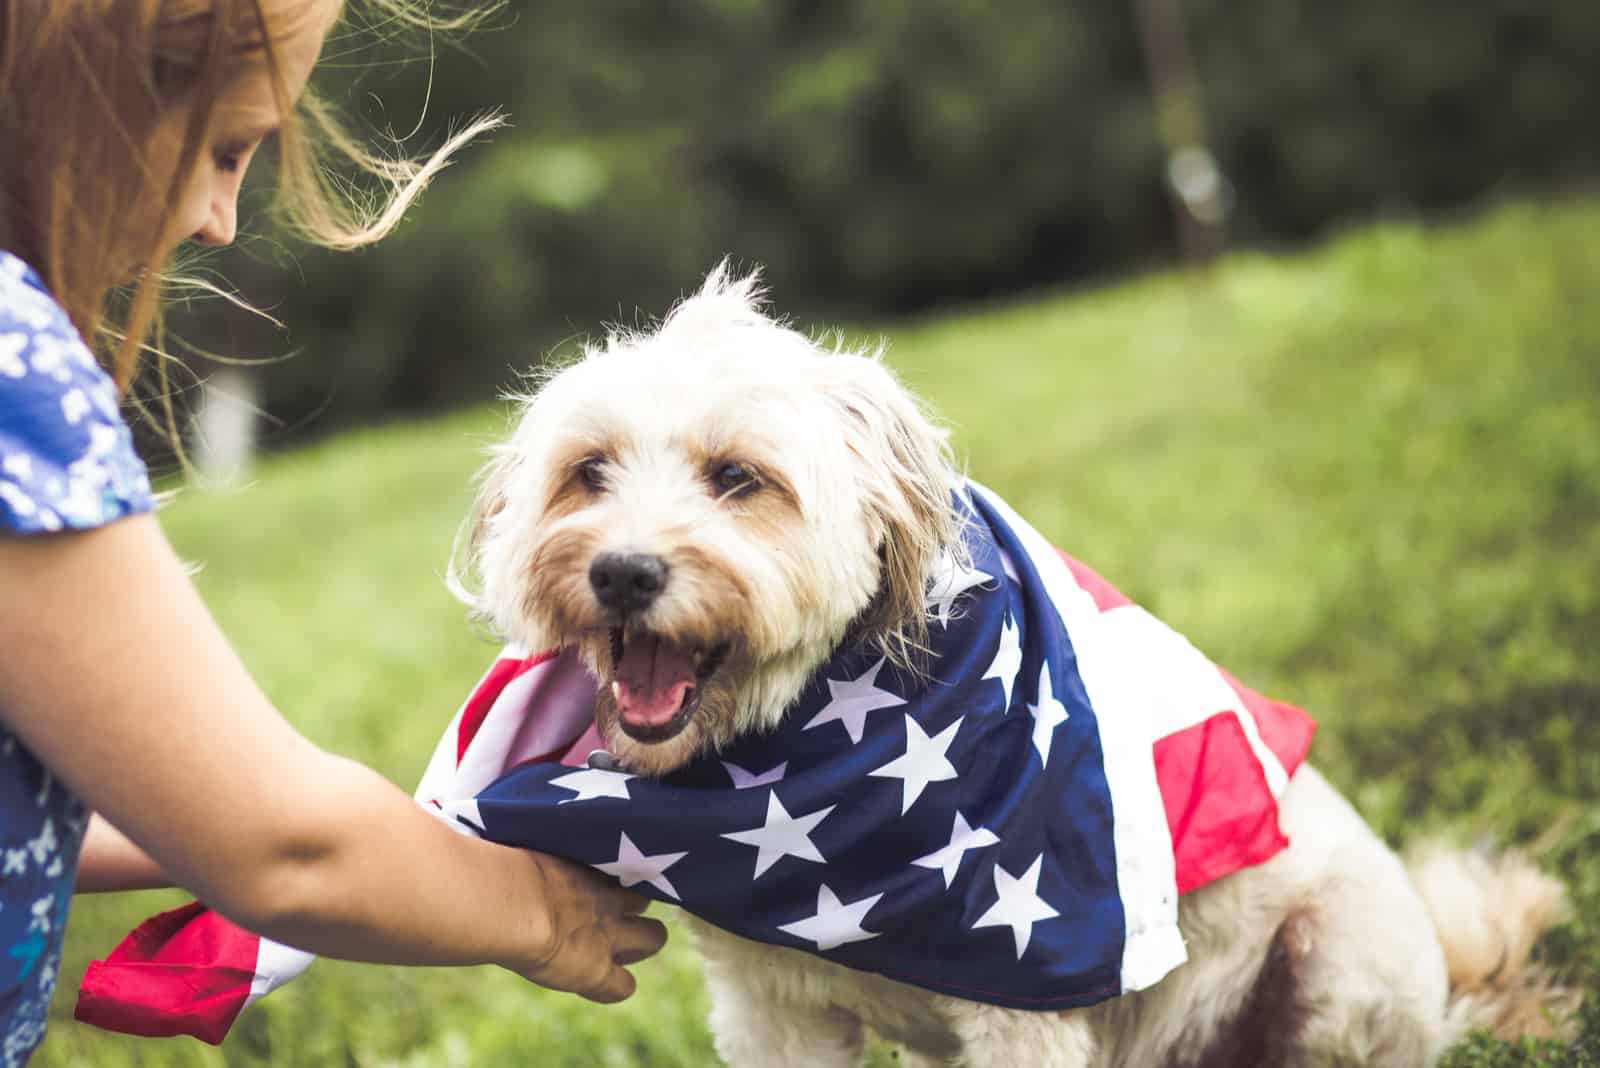 owner putting flag around dog